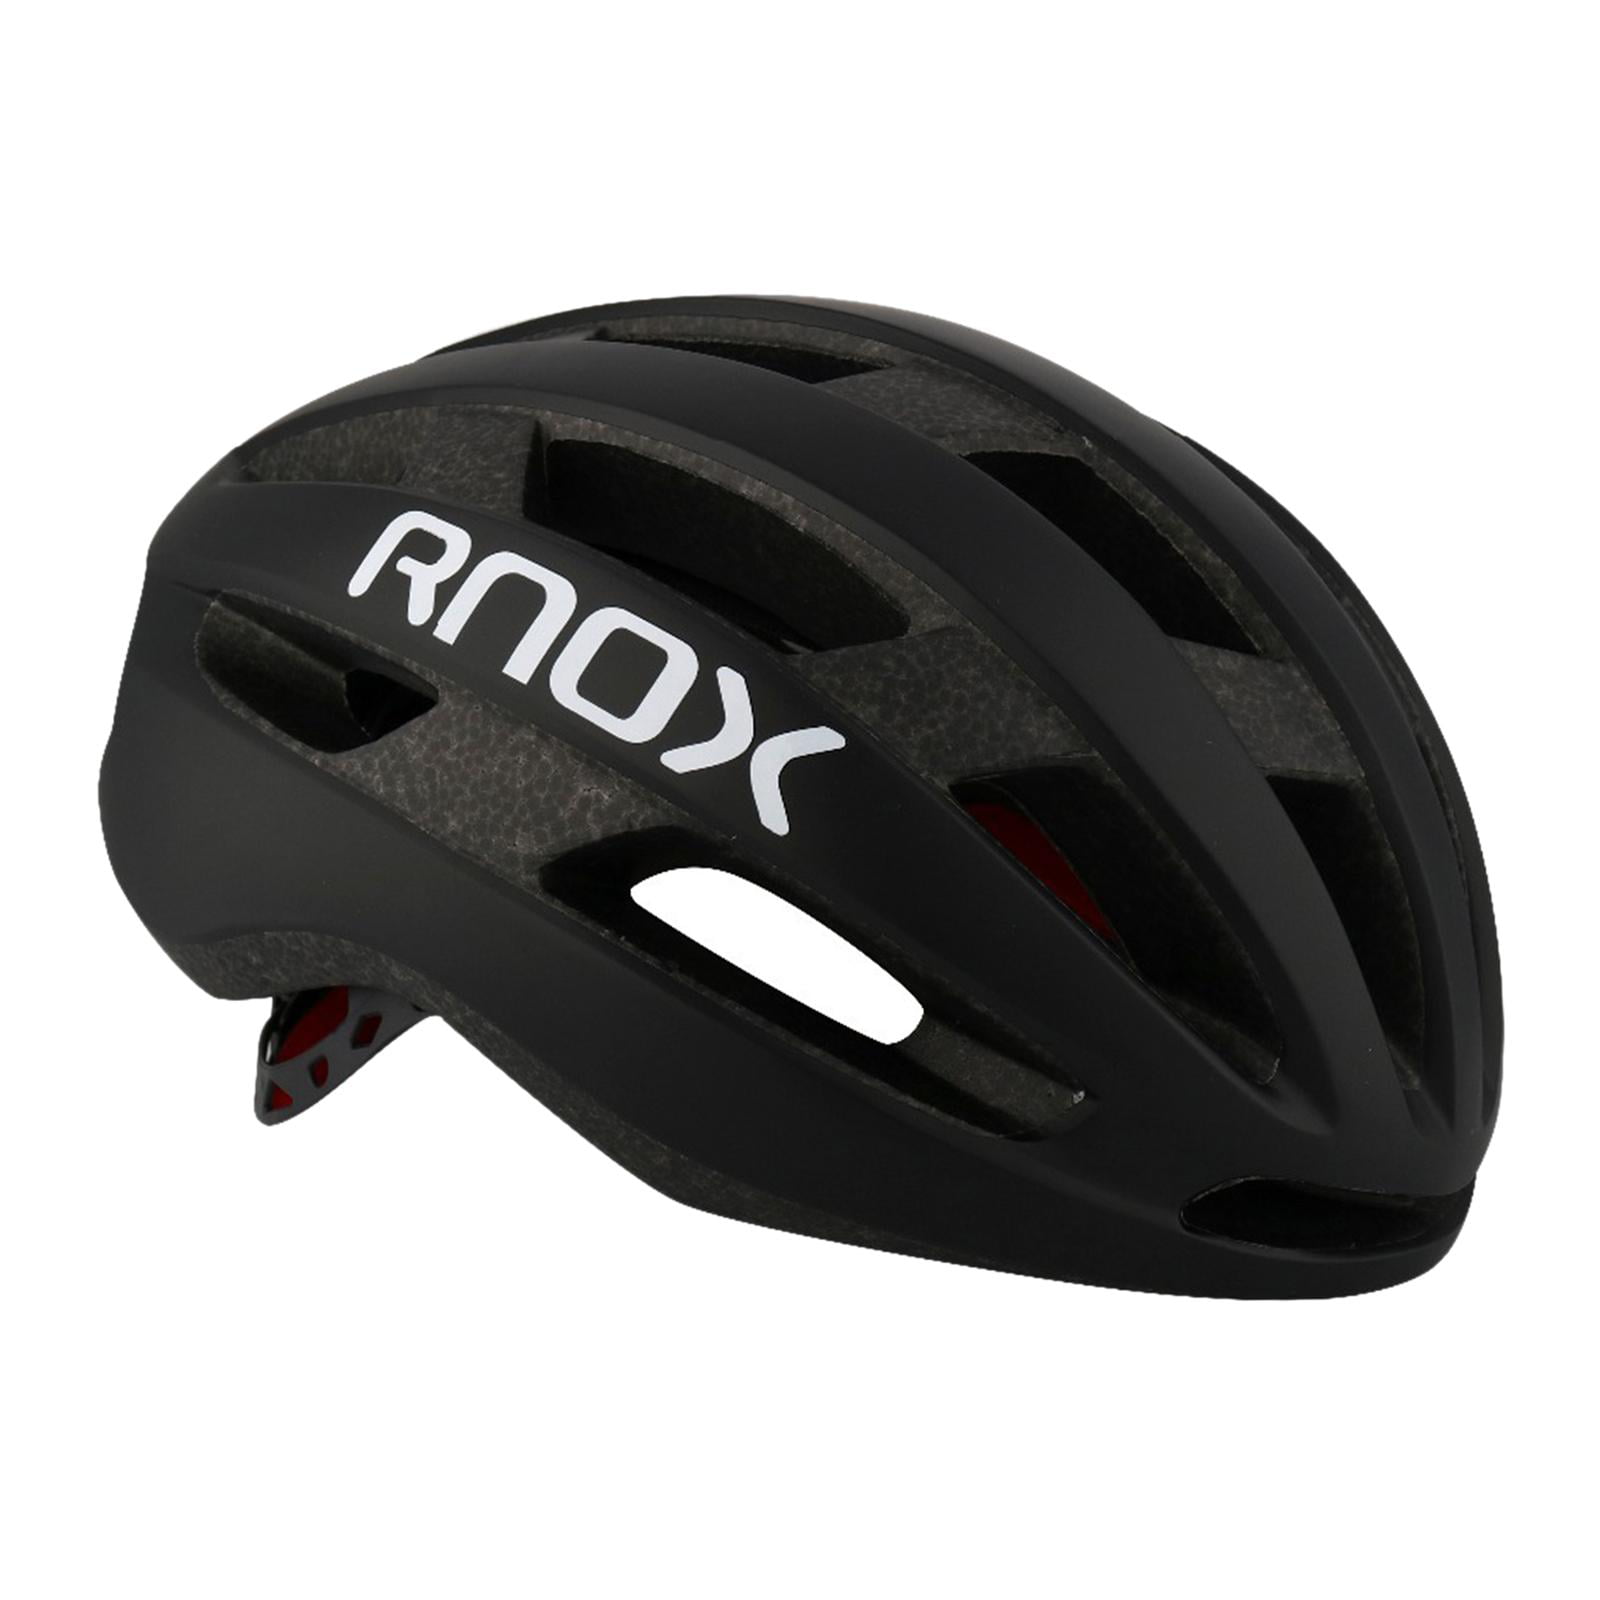 ONE23 Unisex Adult Adjustable Lightweight Cycle Safety Helmet Grey 58-62 cms 